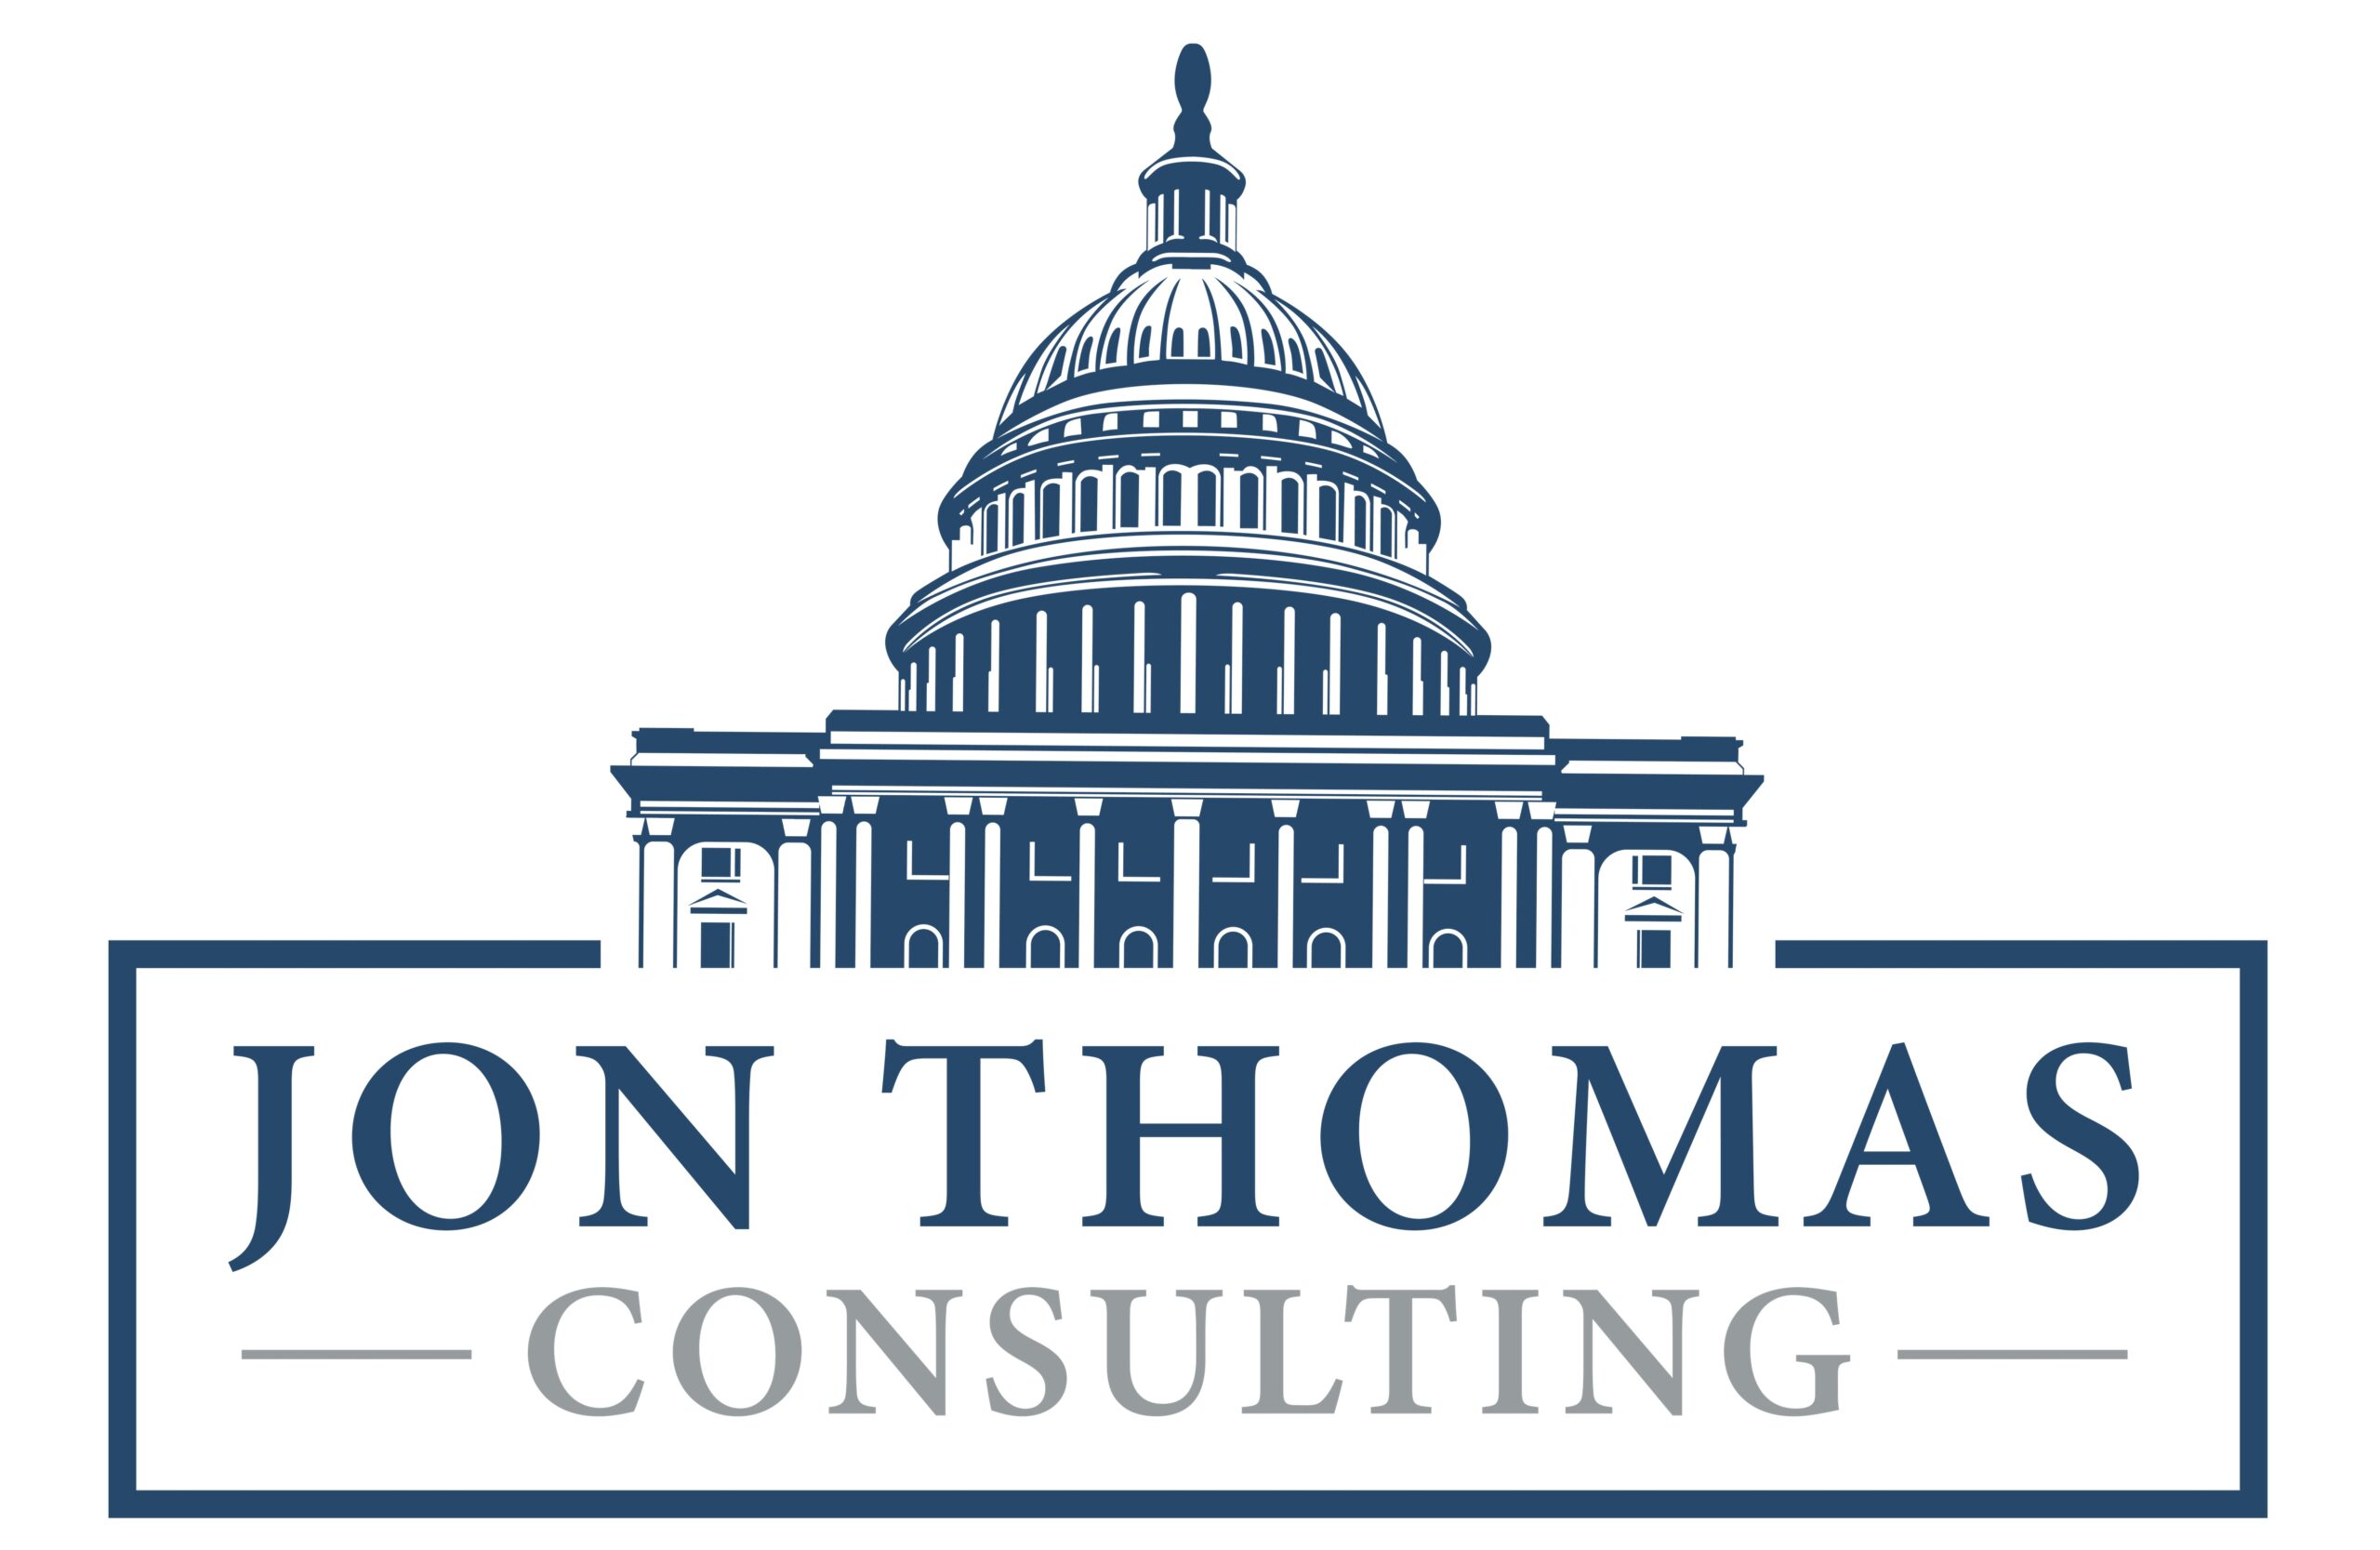 Jon Thomas Consulting Logo 22